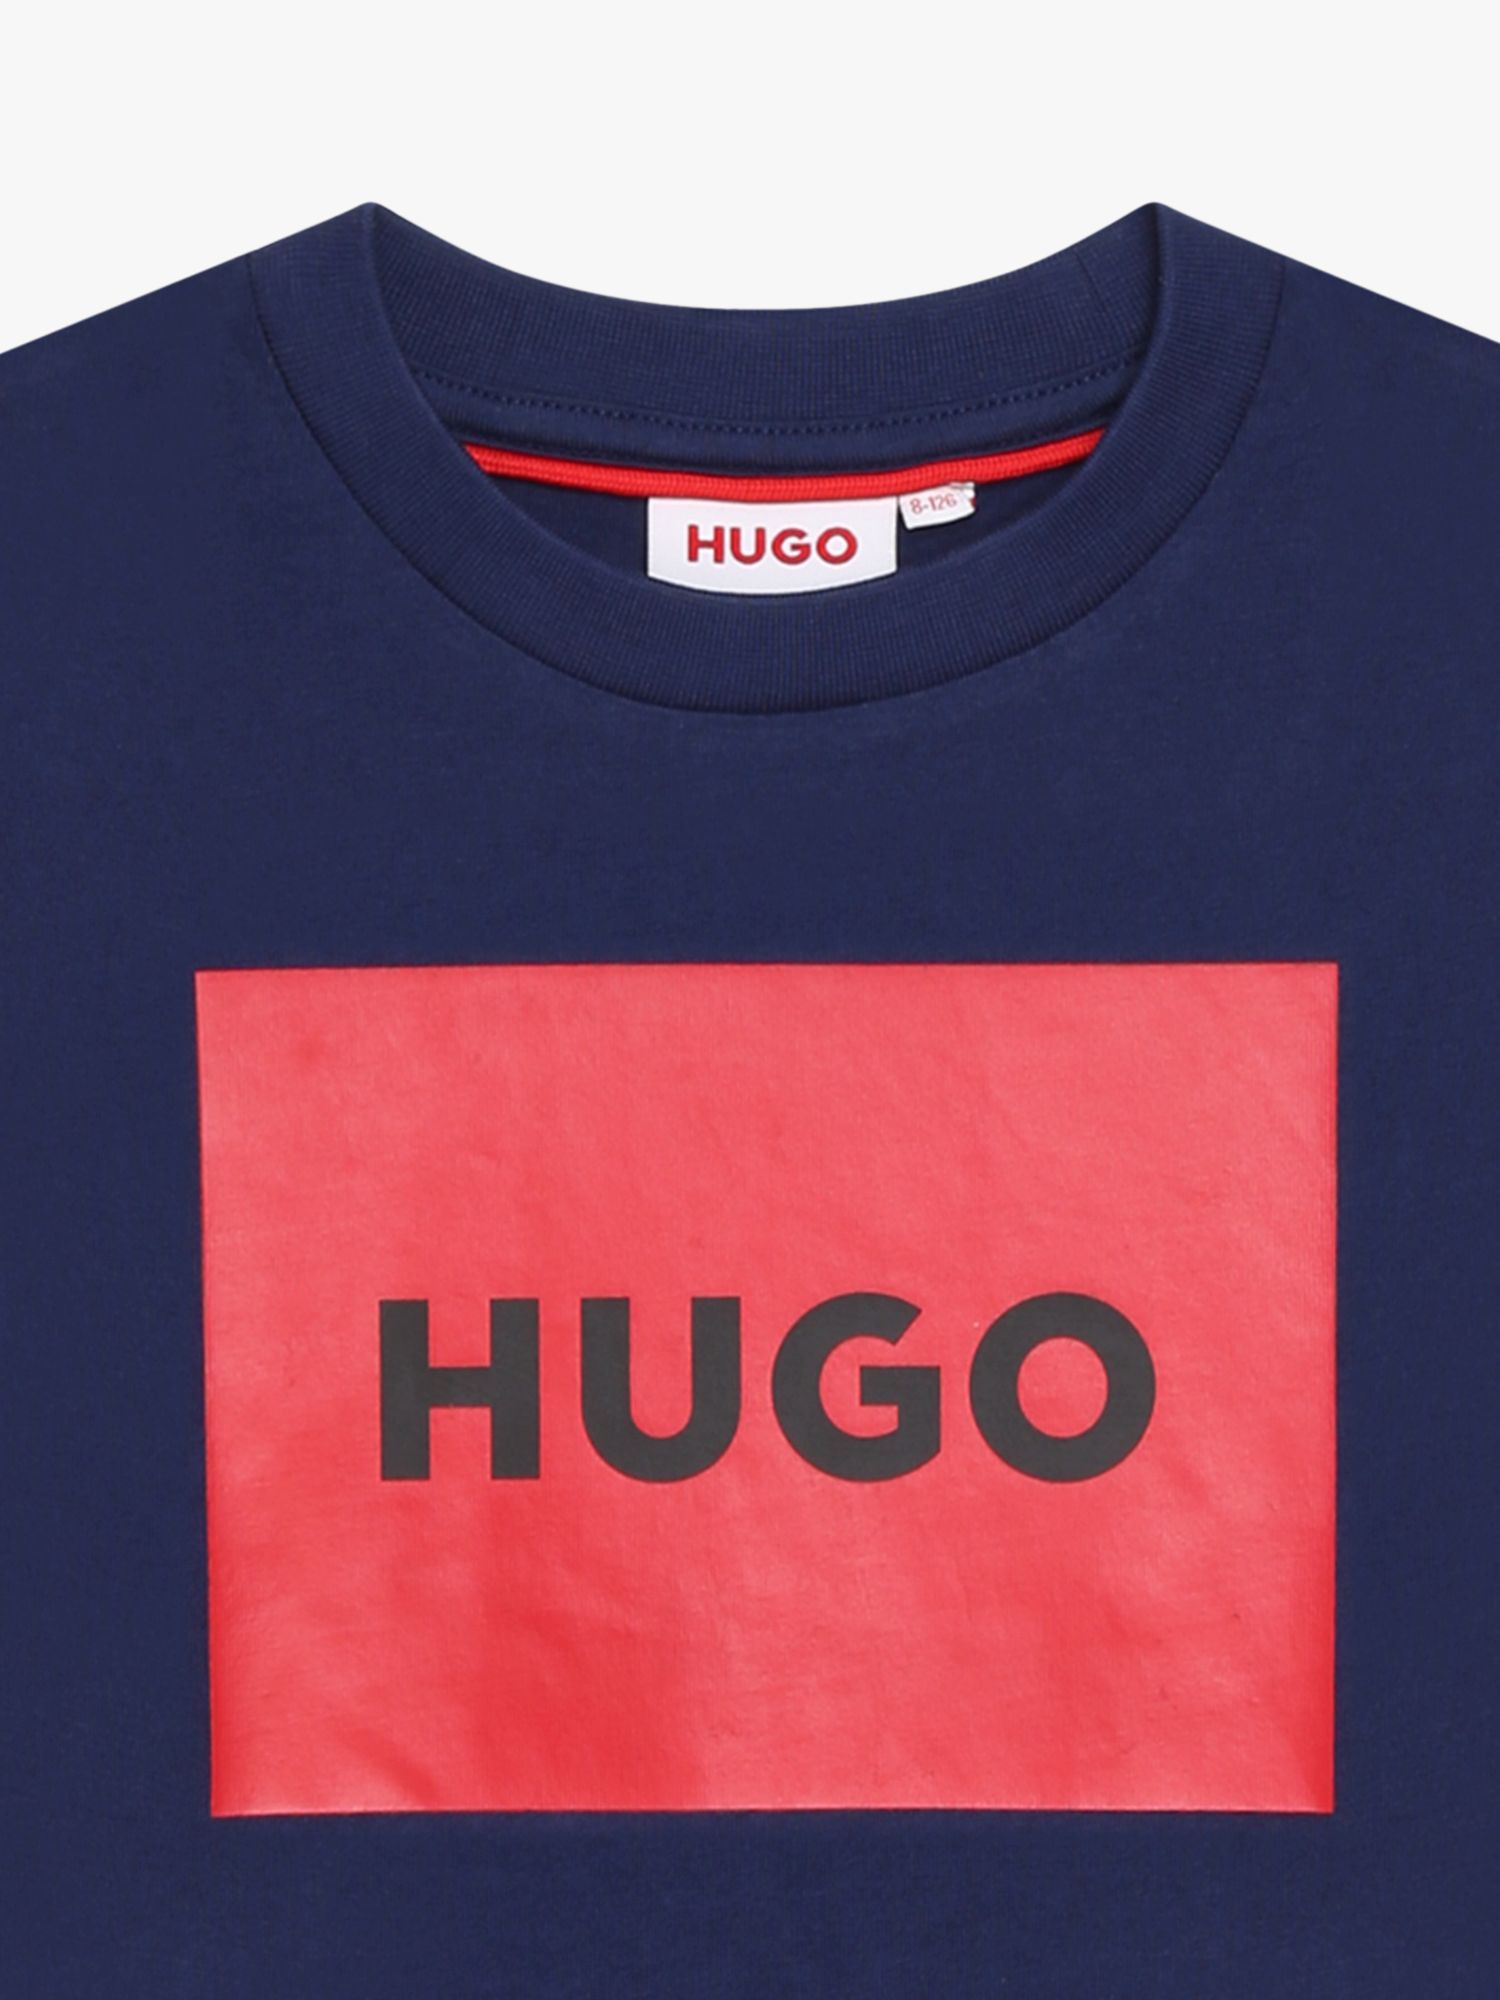 HUGO Kids' Square Logo T-Shirt, Navy/Red, 4 years